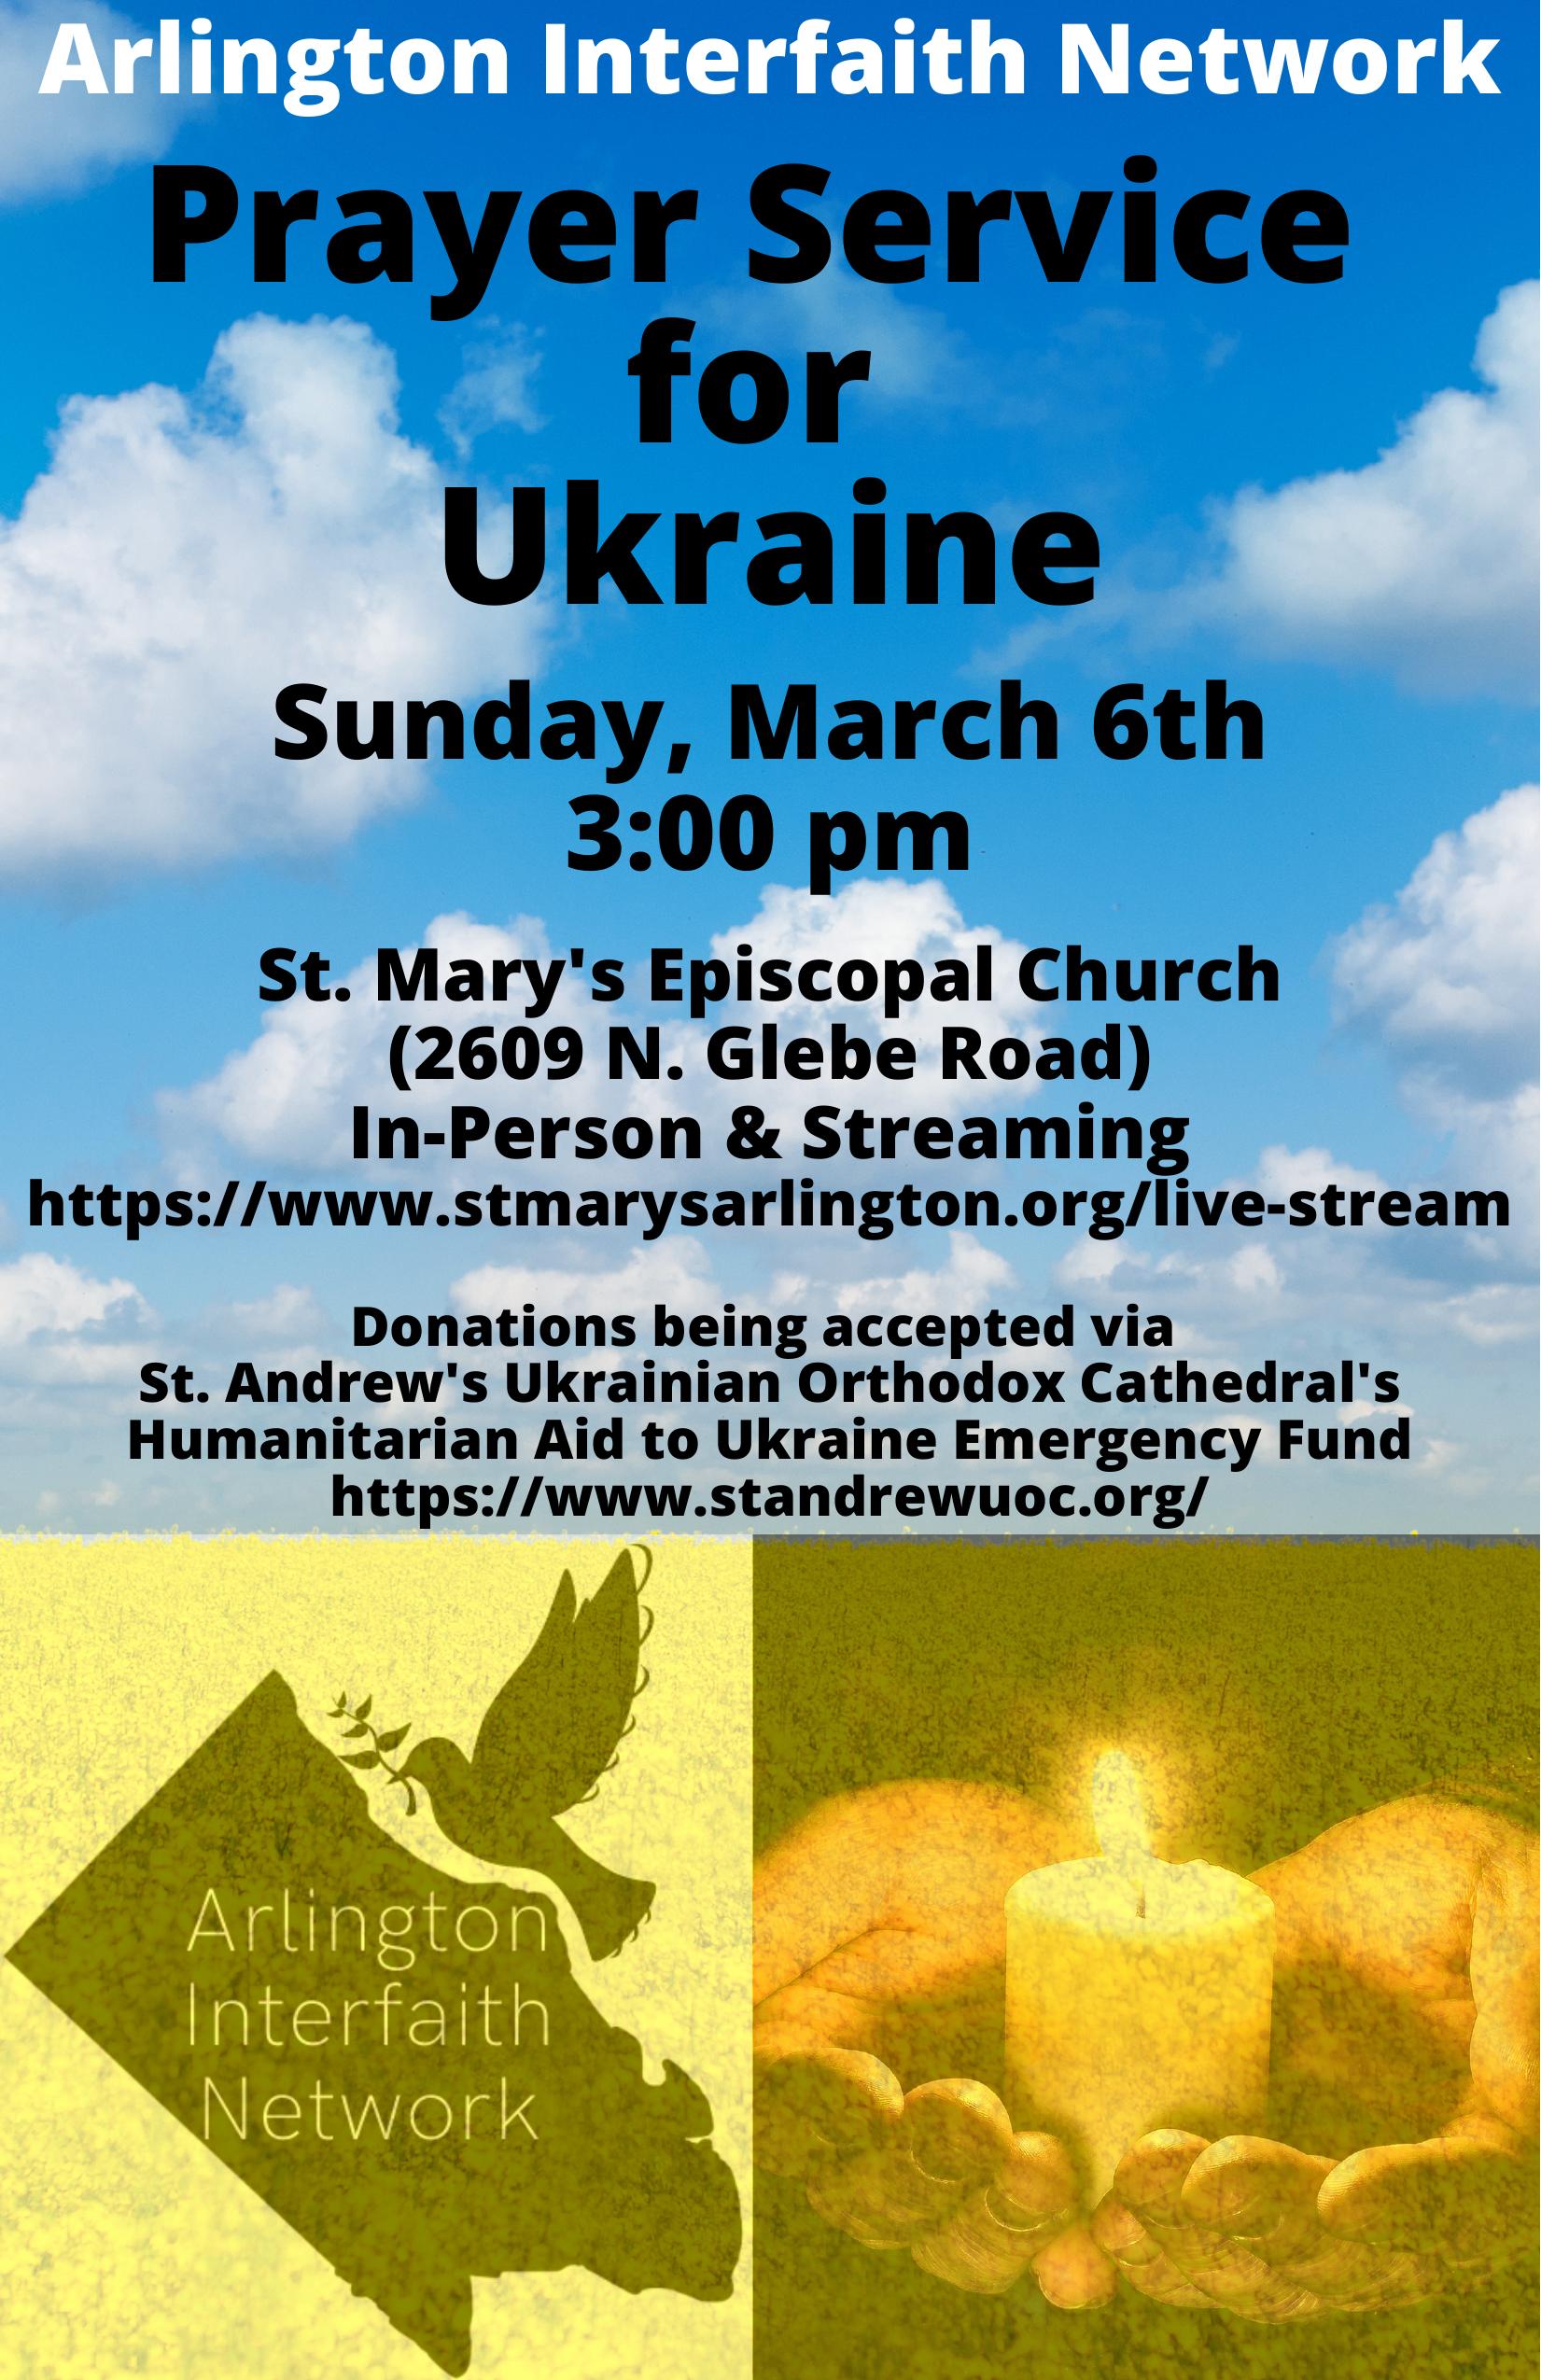 arlington-interfaith-network-prayer-service-for-ukraine_831